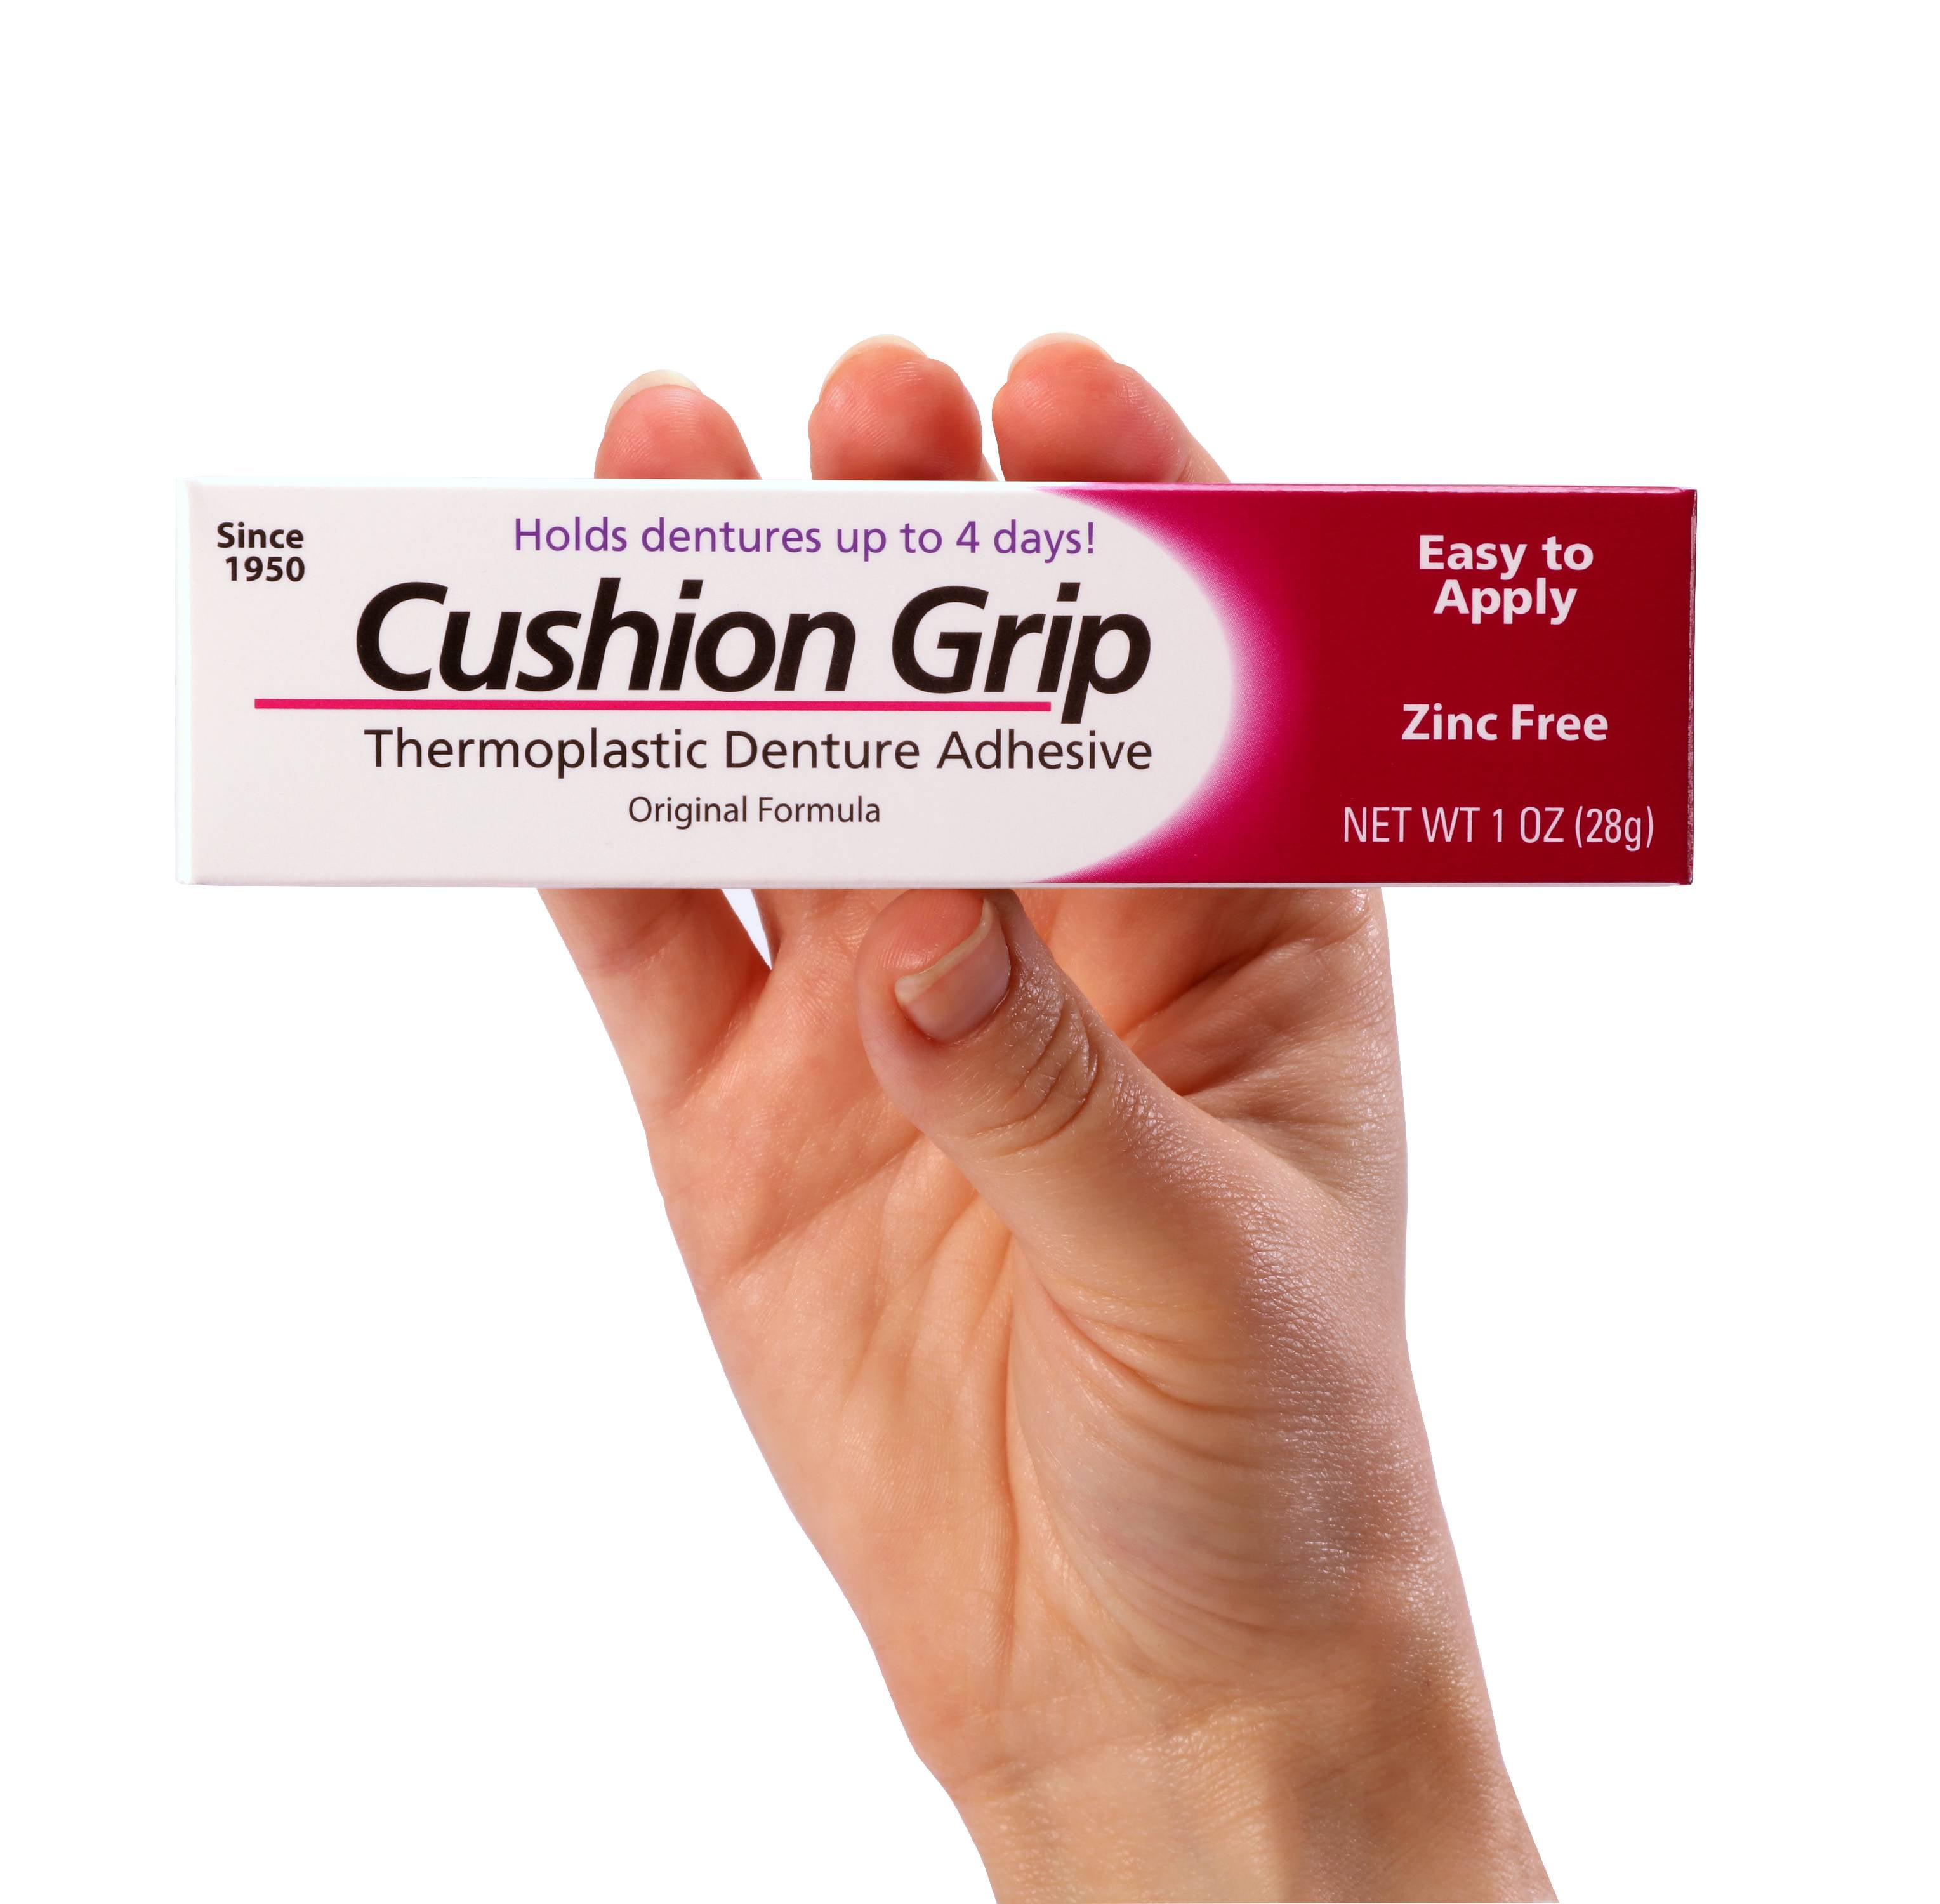 Cushion Grip® Original Thermoplastic Denture Adhesive, 1 oz - Harris Teeter